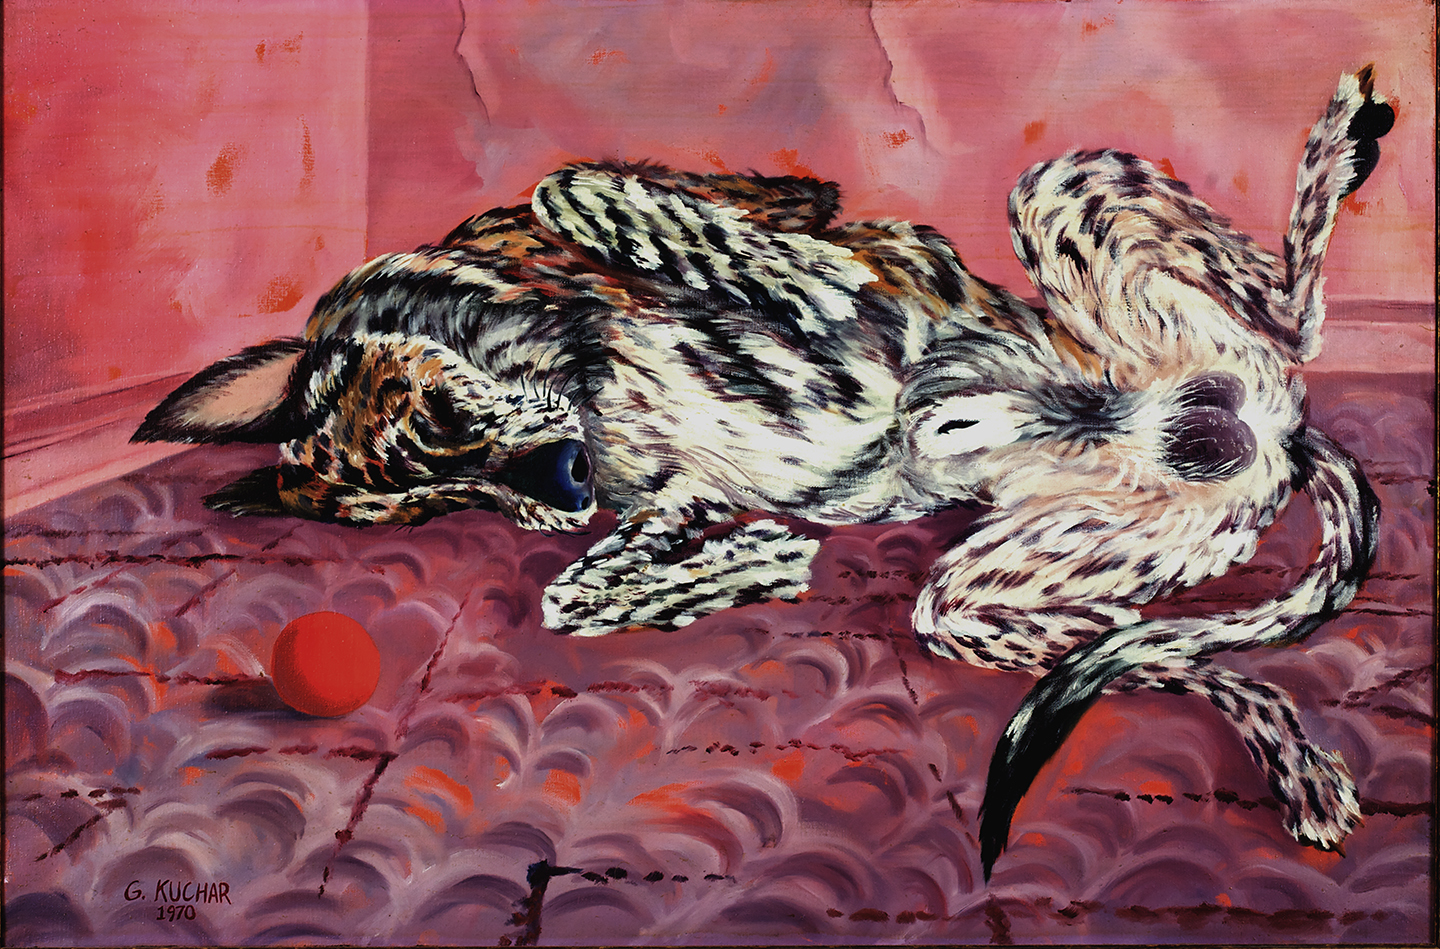  George Kuchar, "Bocko", 1970&nbsp;Courtesy Ghebaly Gallery. © Estate of George Kuchar 